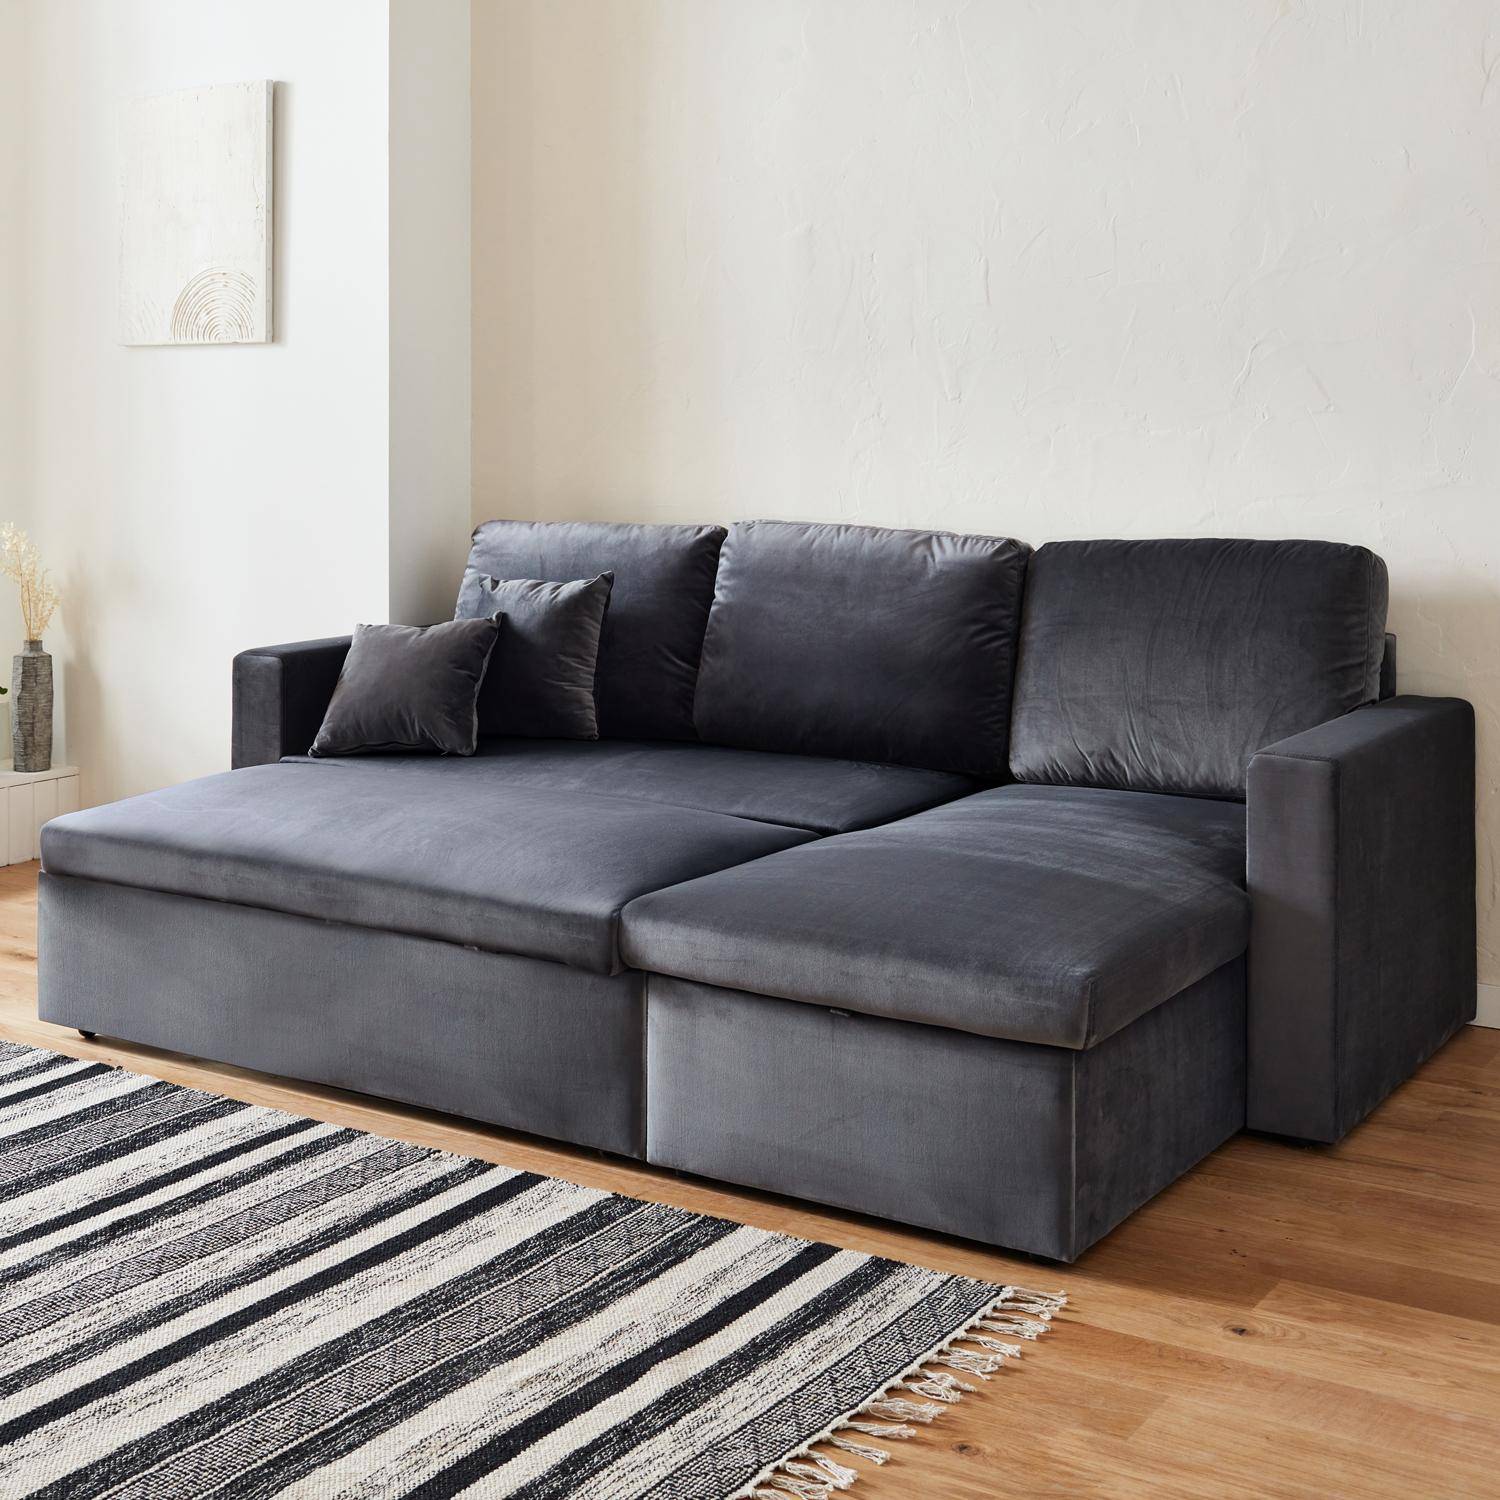 Dark grey velvet 3-seater convertible corner sofa, reversible corner armchair, storage box, modular bed Photo3